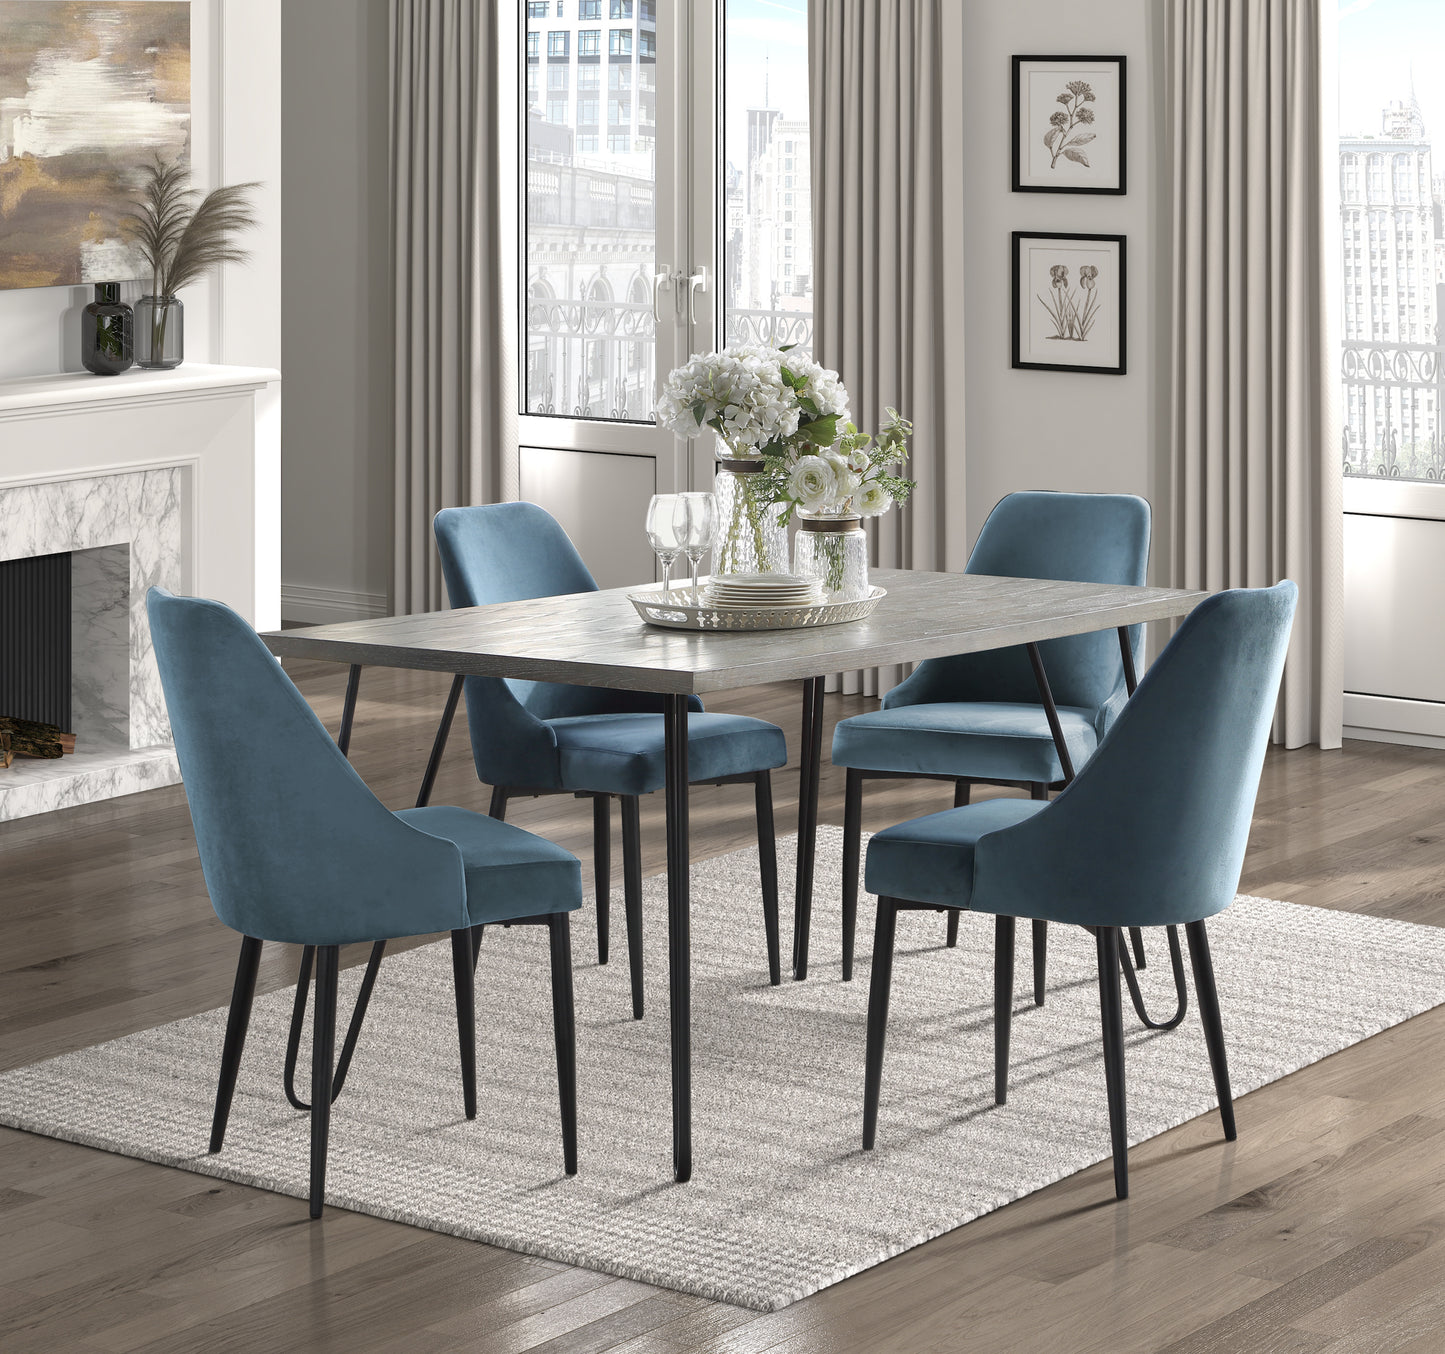 Modern Sleek Design Dining Table 1pc Light Gray Wooden Top Black Finish Metal Legs Dining Furniture